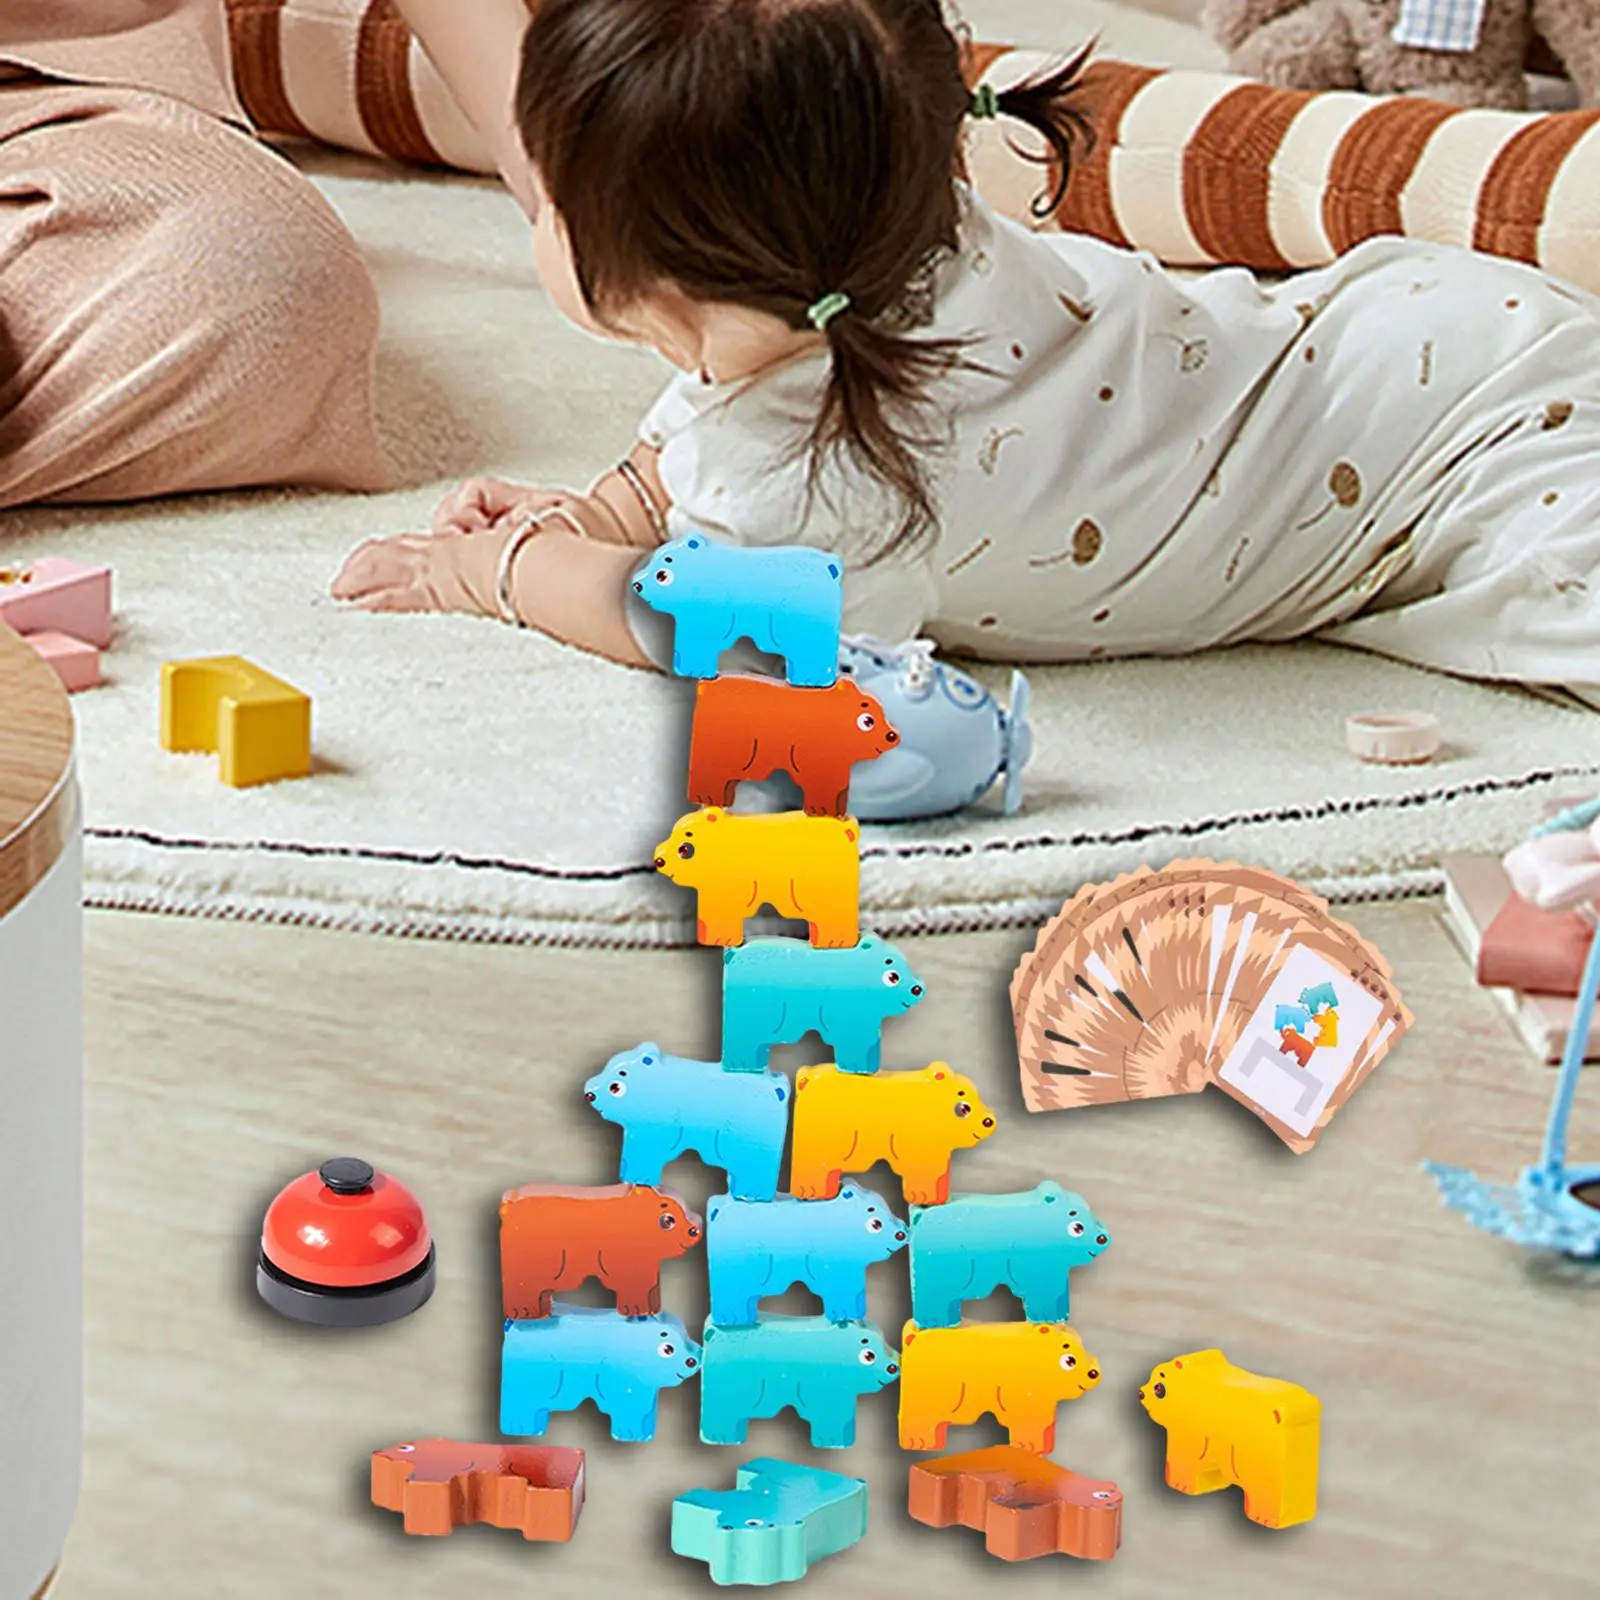 Montessori Preschool Educational Toys Learning Parent Children Interactive Wooden Stacking Toy for Girls Children Kids Boys Gift